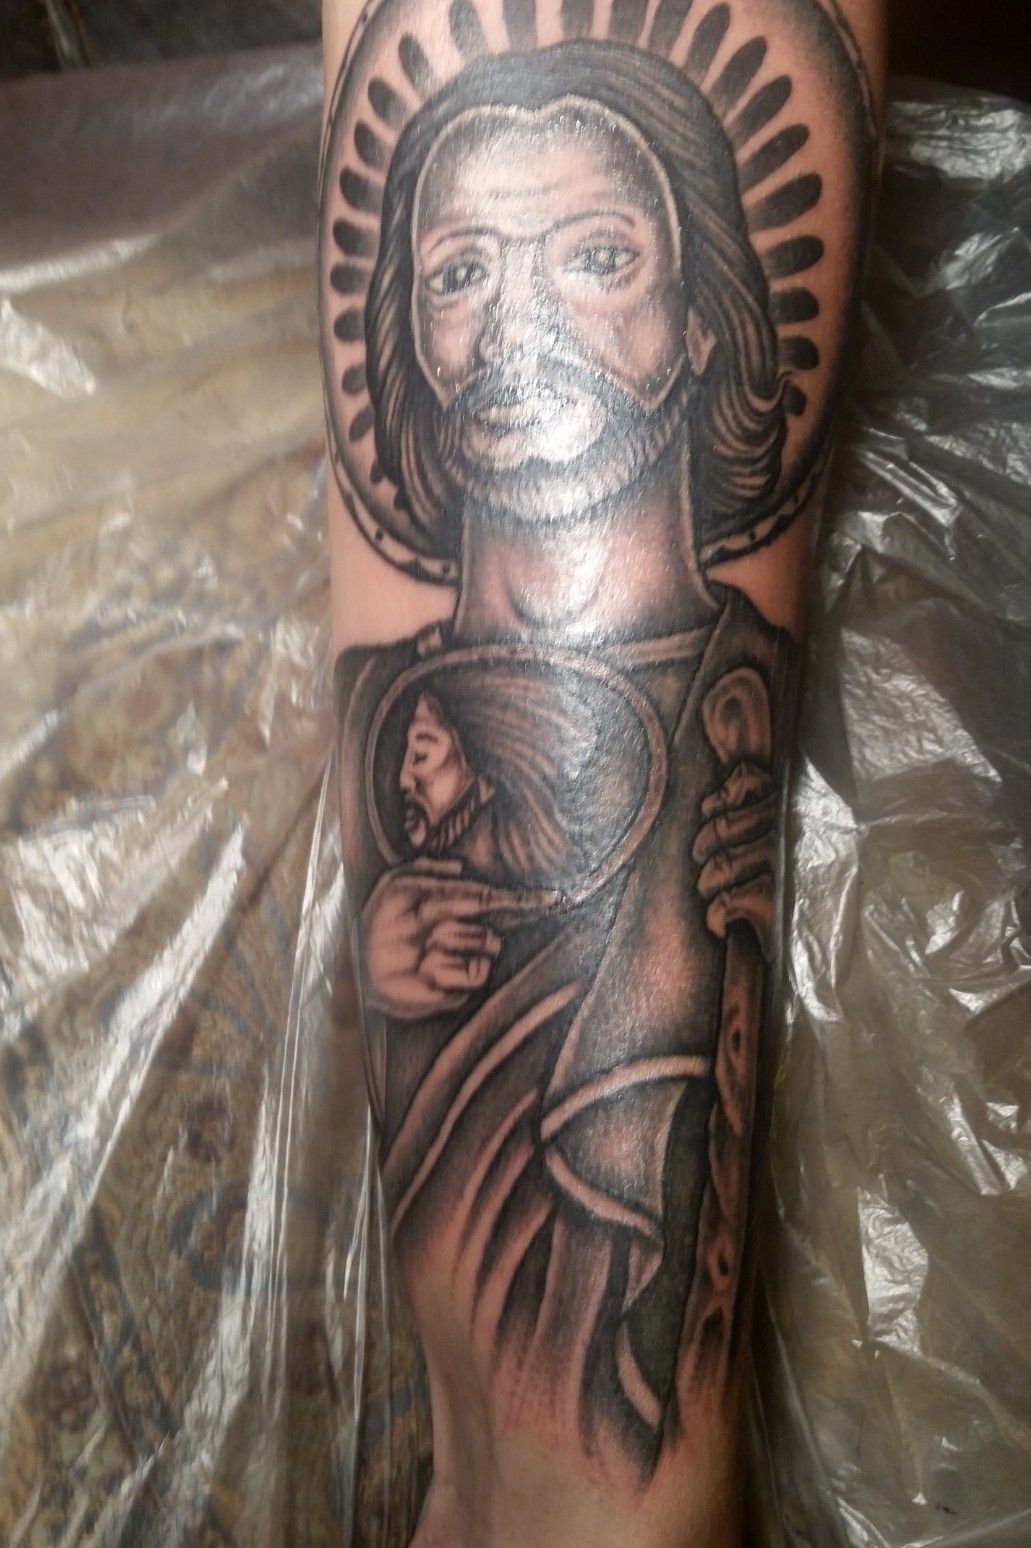 Saint Jude tattoo located on the forearm